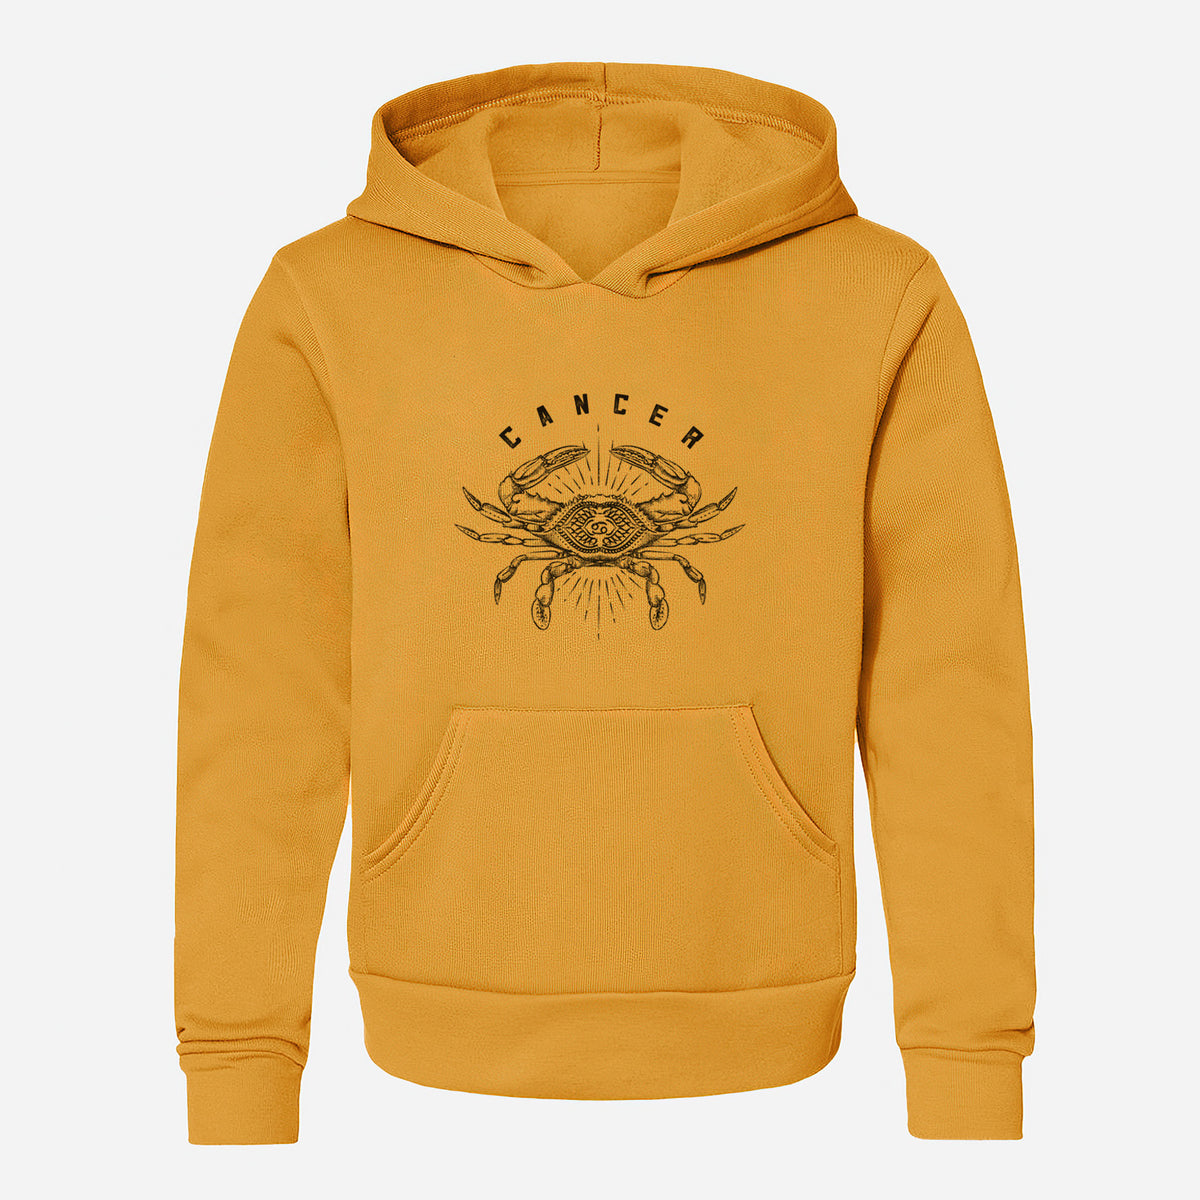 Cancer - Crab - Youth Hoodie Sweatshirt